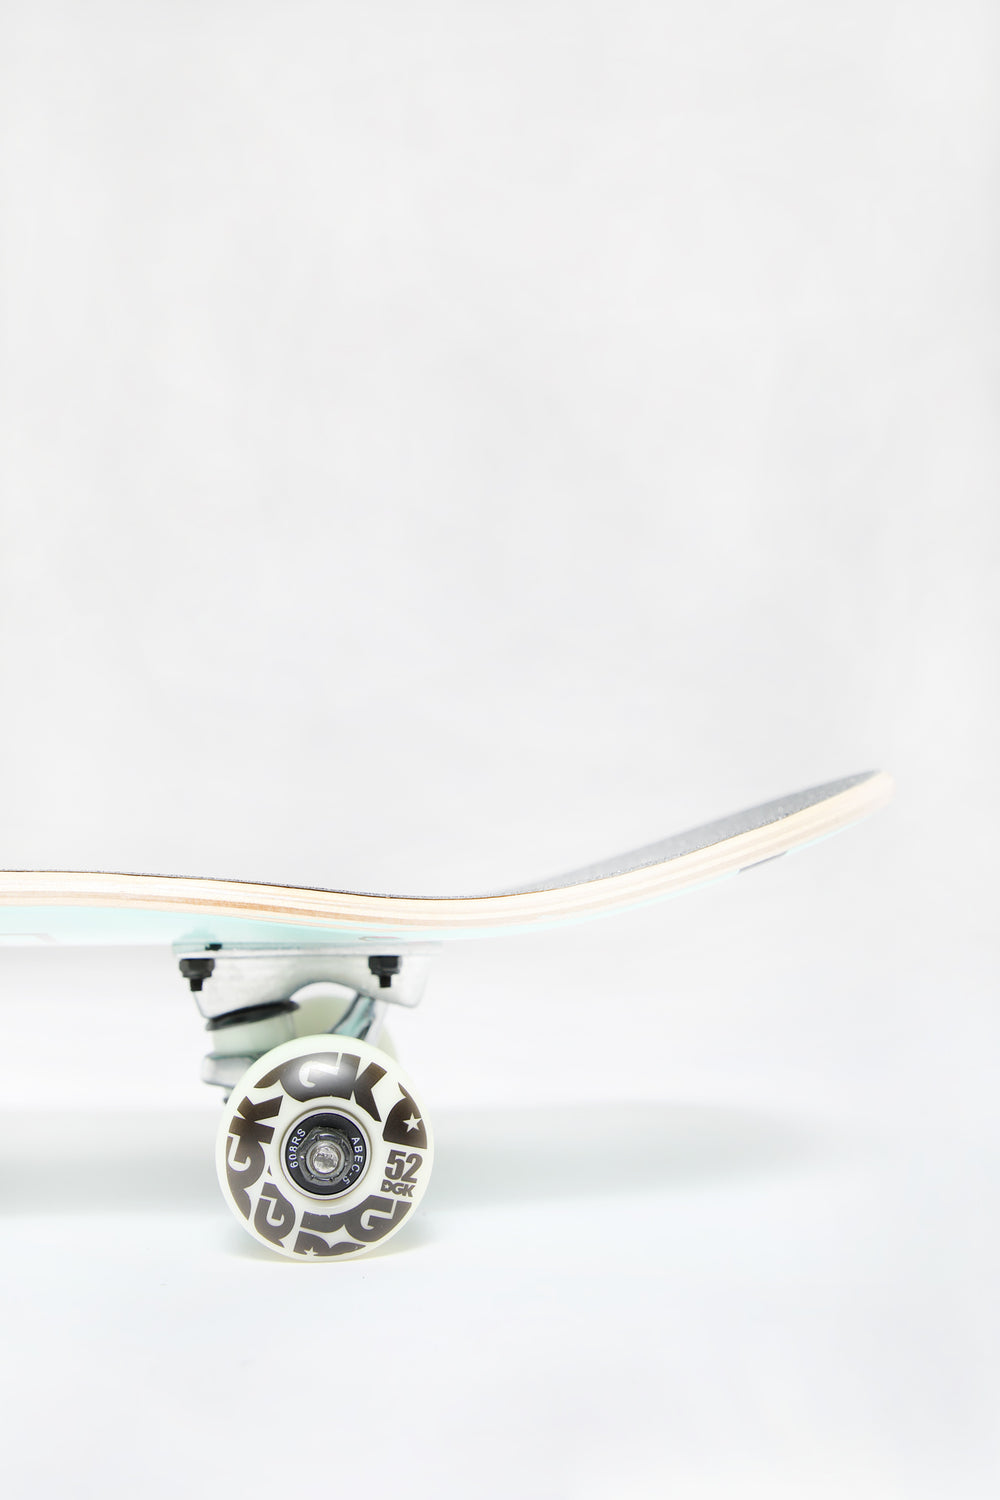 DGK Zen Skateboard 7.75